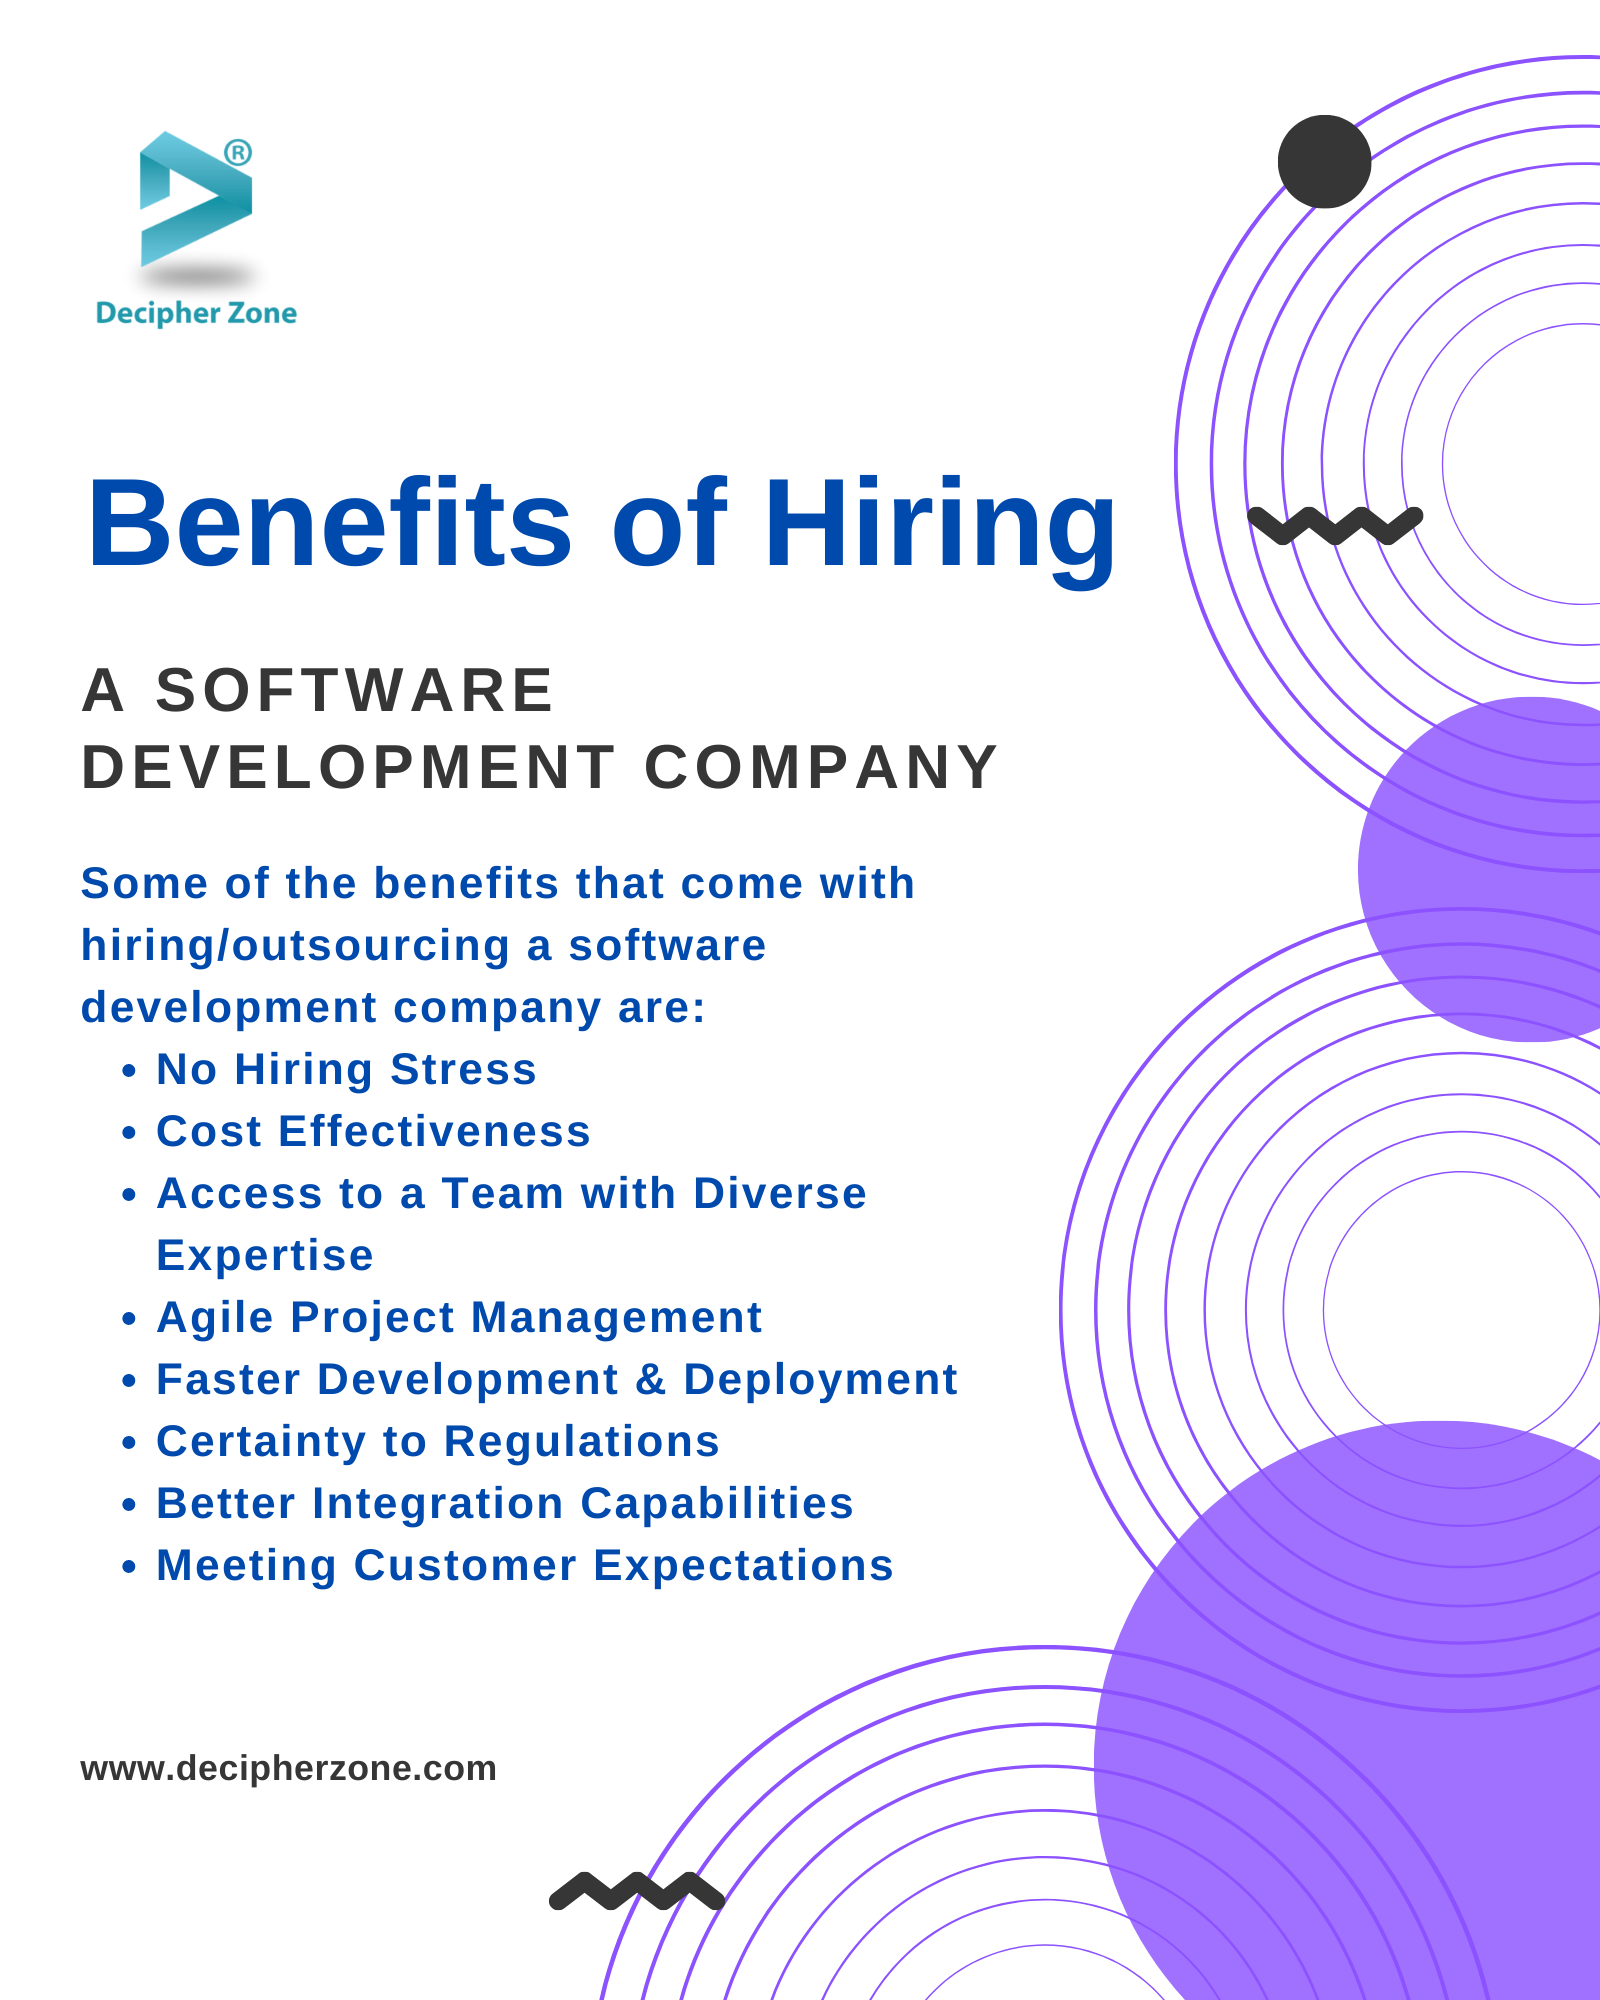 Benefits of Hiring a Software Development Company